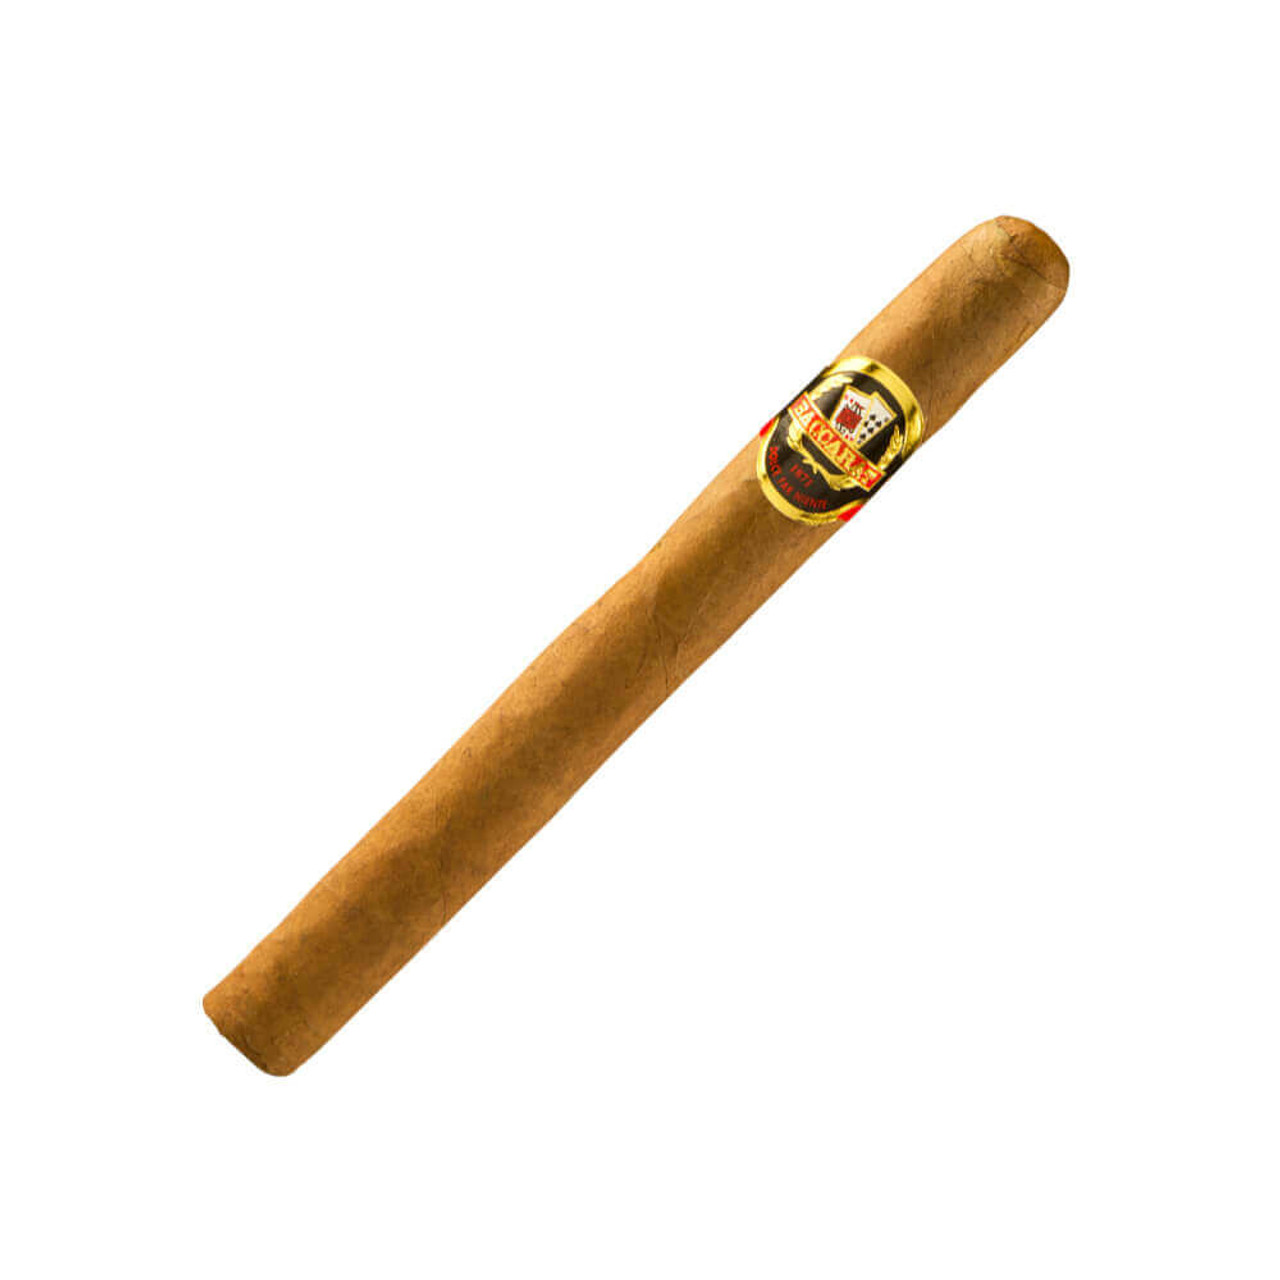 Baccarat Nicaragua Churchill Cigars - 7 x 50 Single